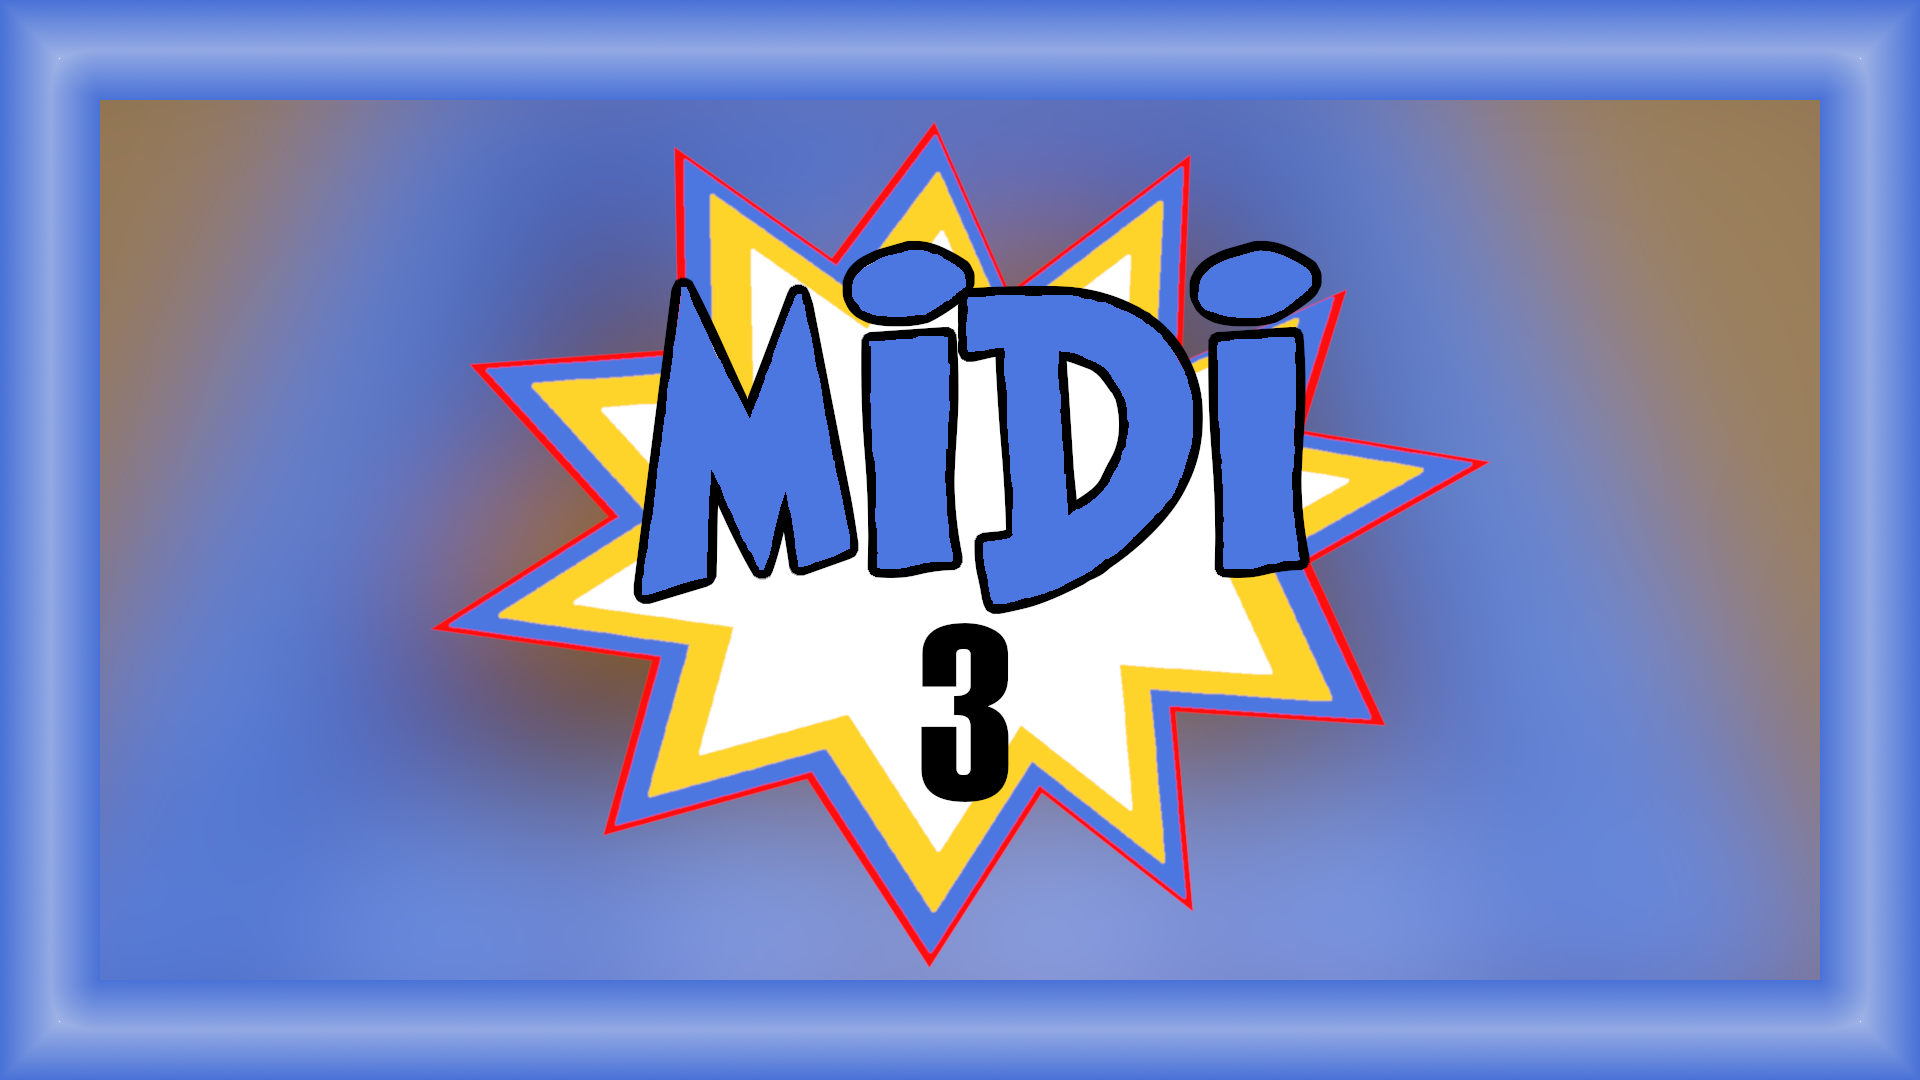 Midi 3